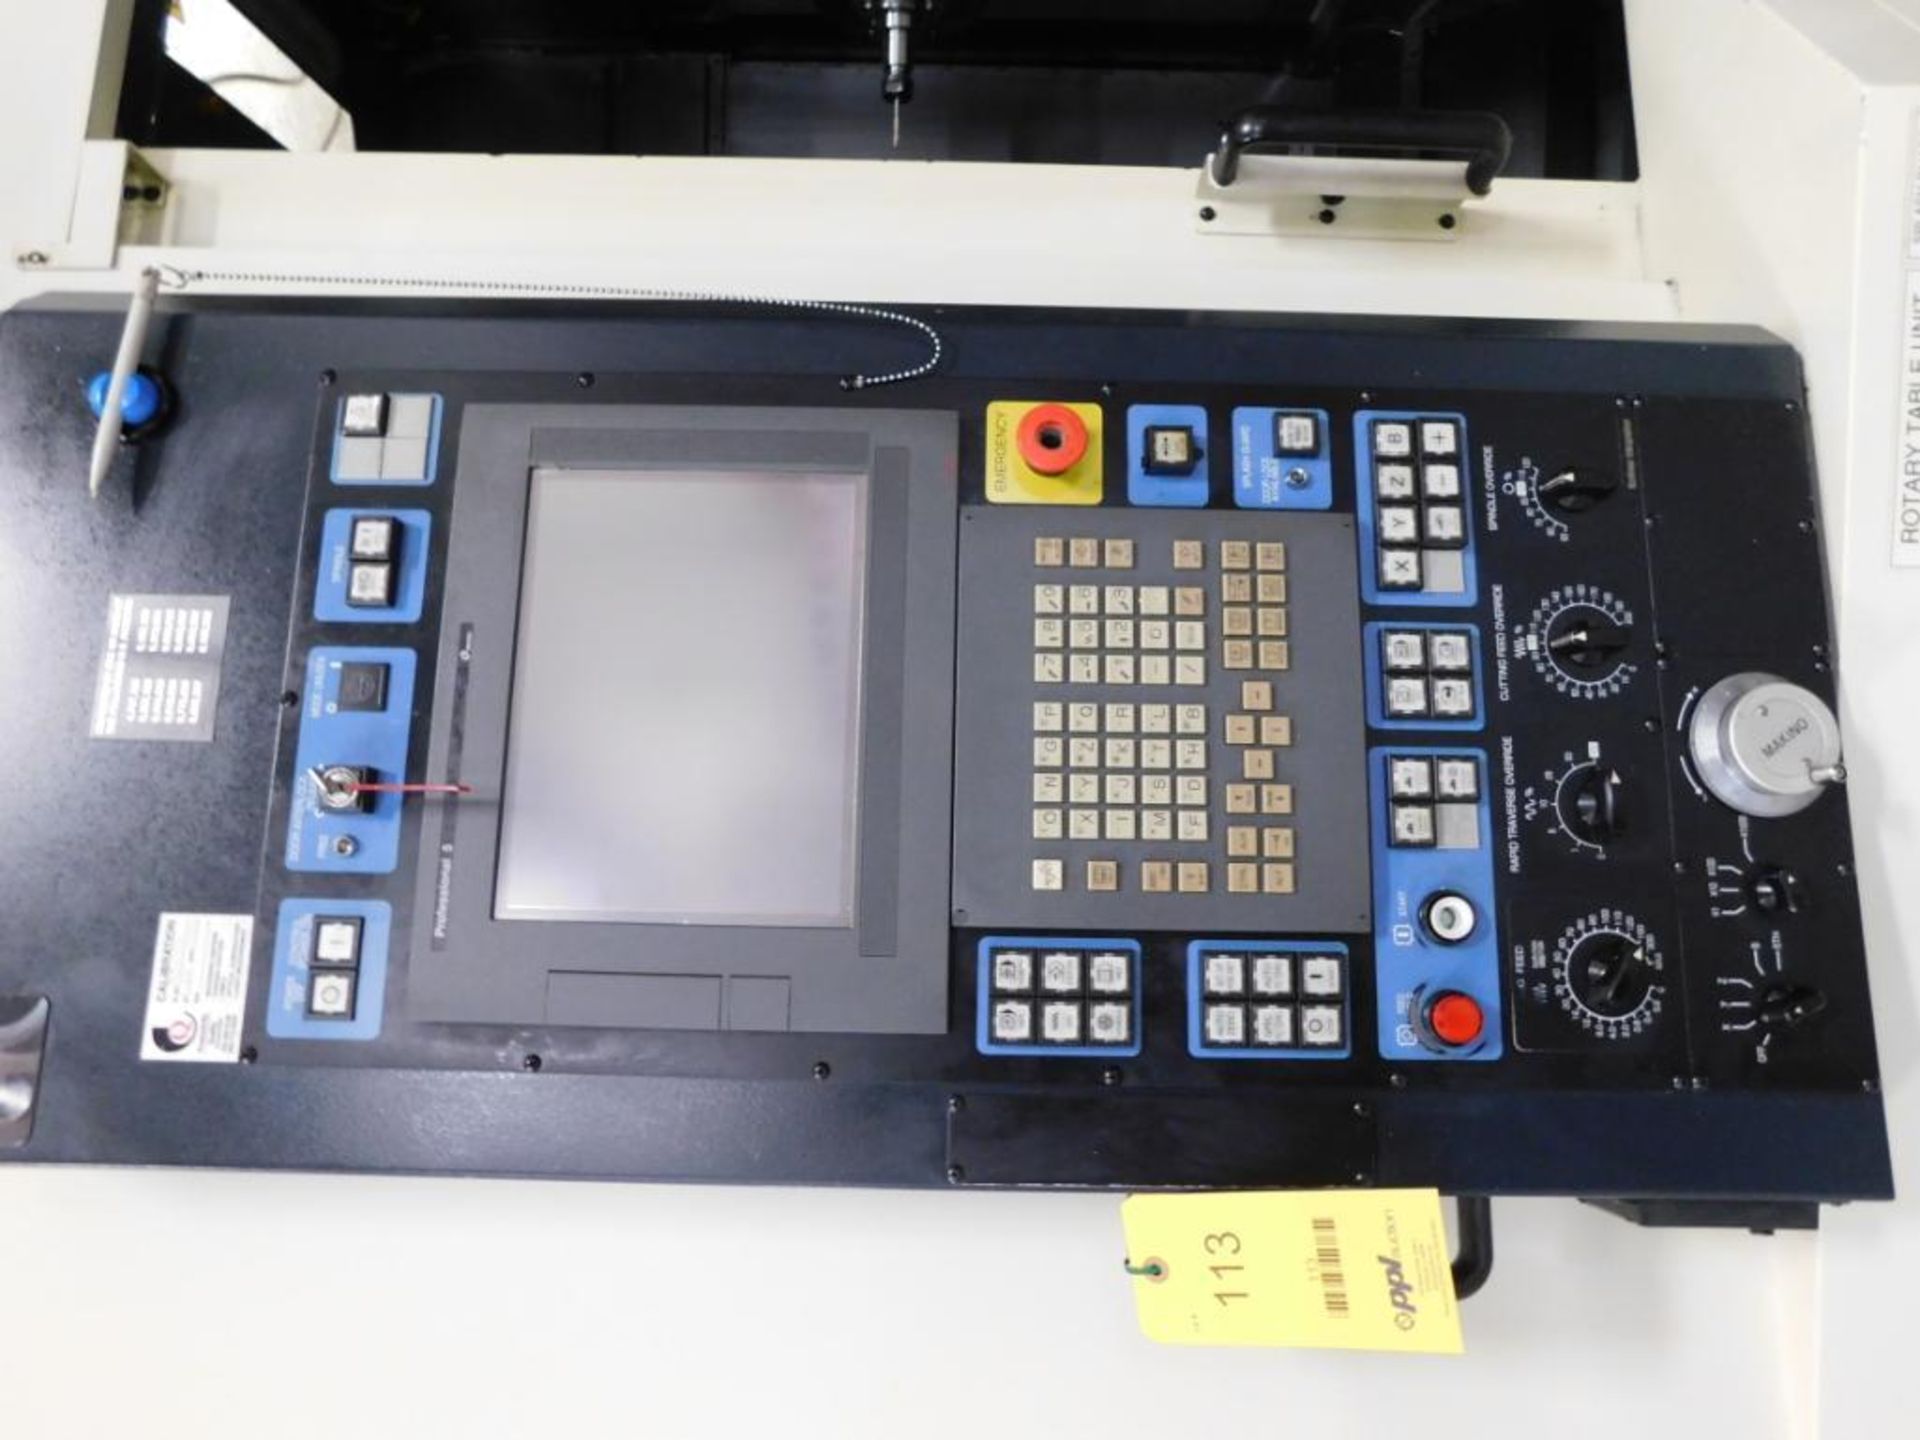 Makino CNC Horizontal Maching Center, Model A61, S/N 08-588 (2008), 12,000 RPM, 40 Taper, 15 HP, 19. - Image 5 of 7